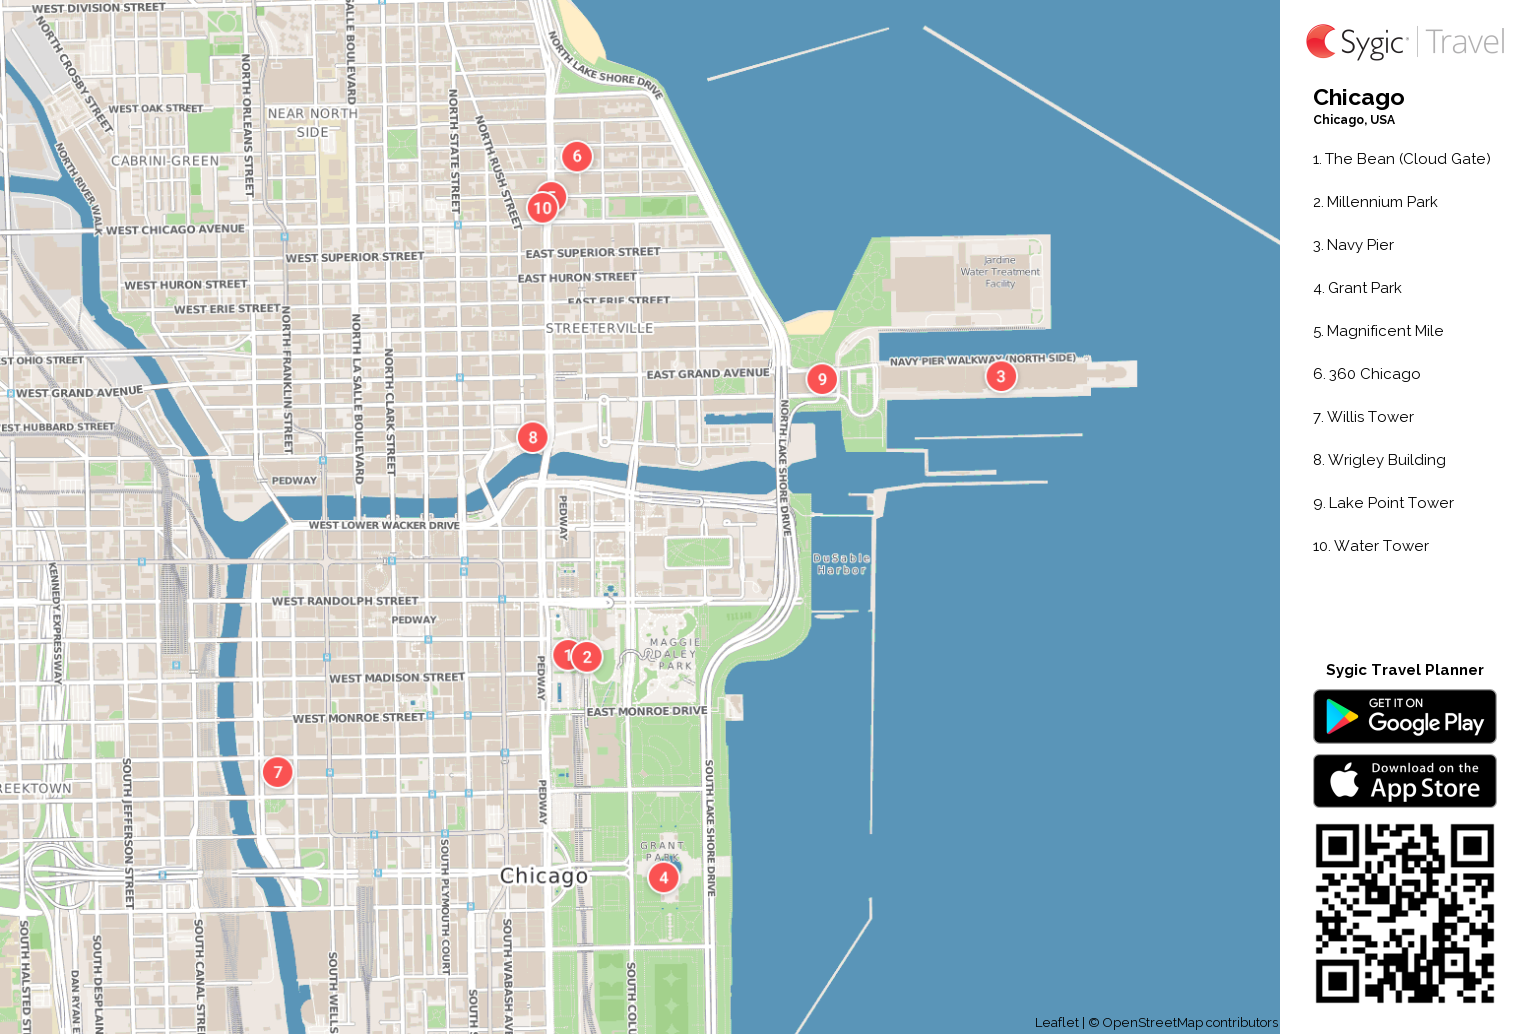 chicago printable tourist map | sygic travel